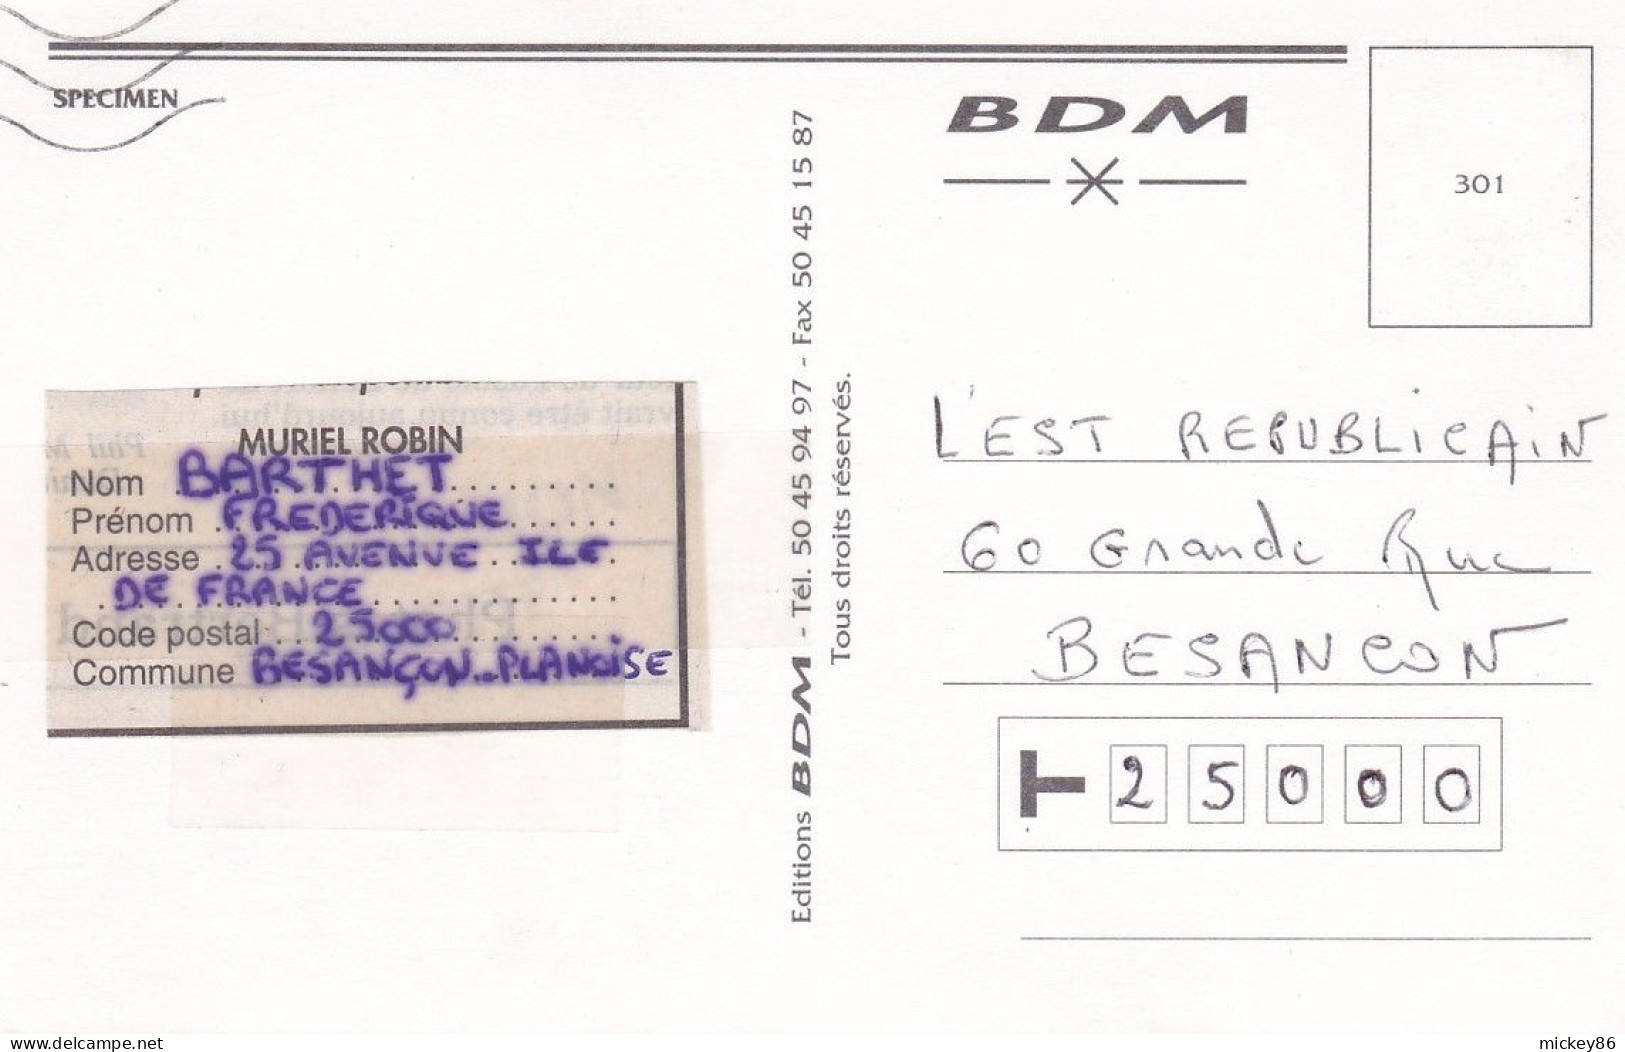 Carte Postale Moderne  --monnaie ---Spécimen  Billet De 500 Francs ..........à Saisir - Monedas (representaciones)